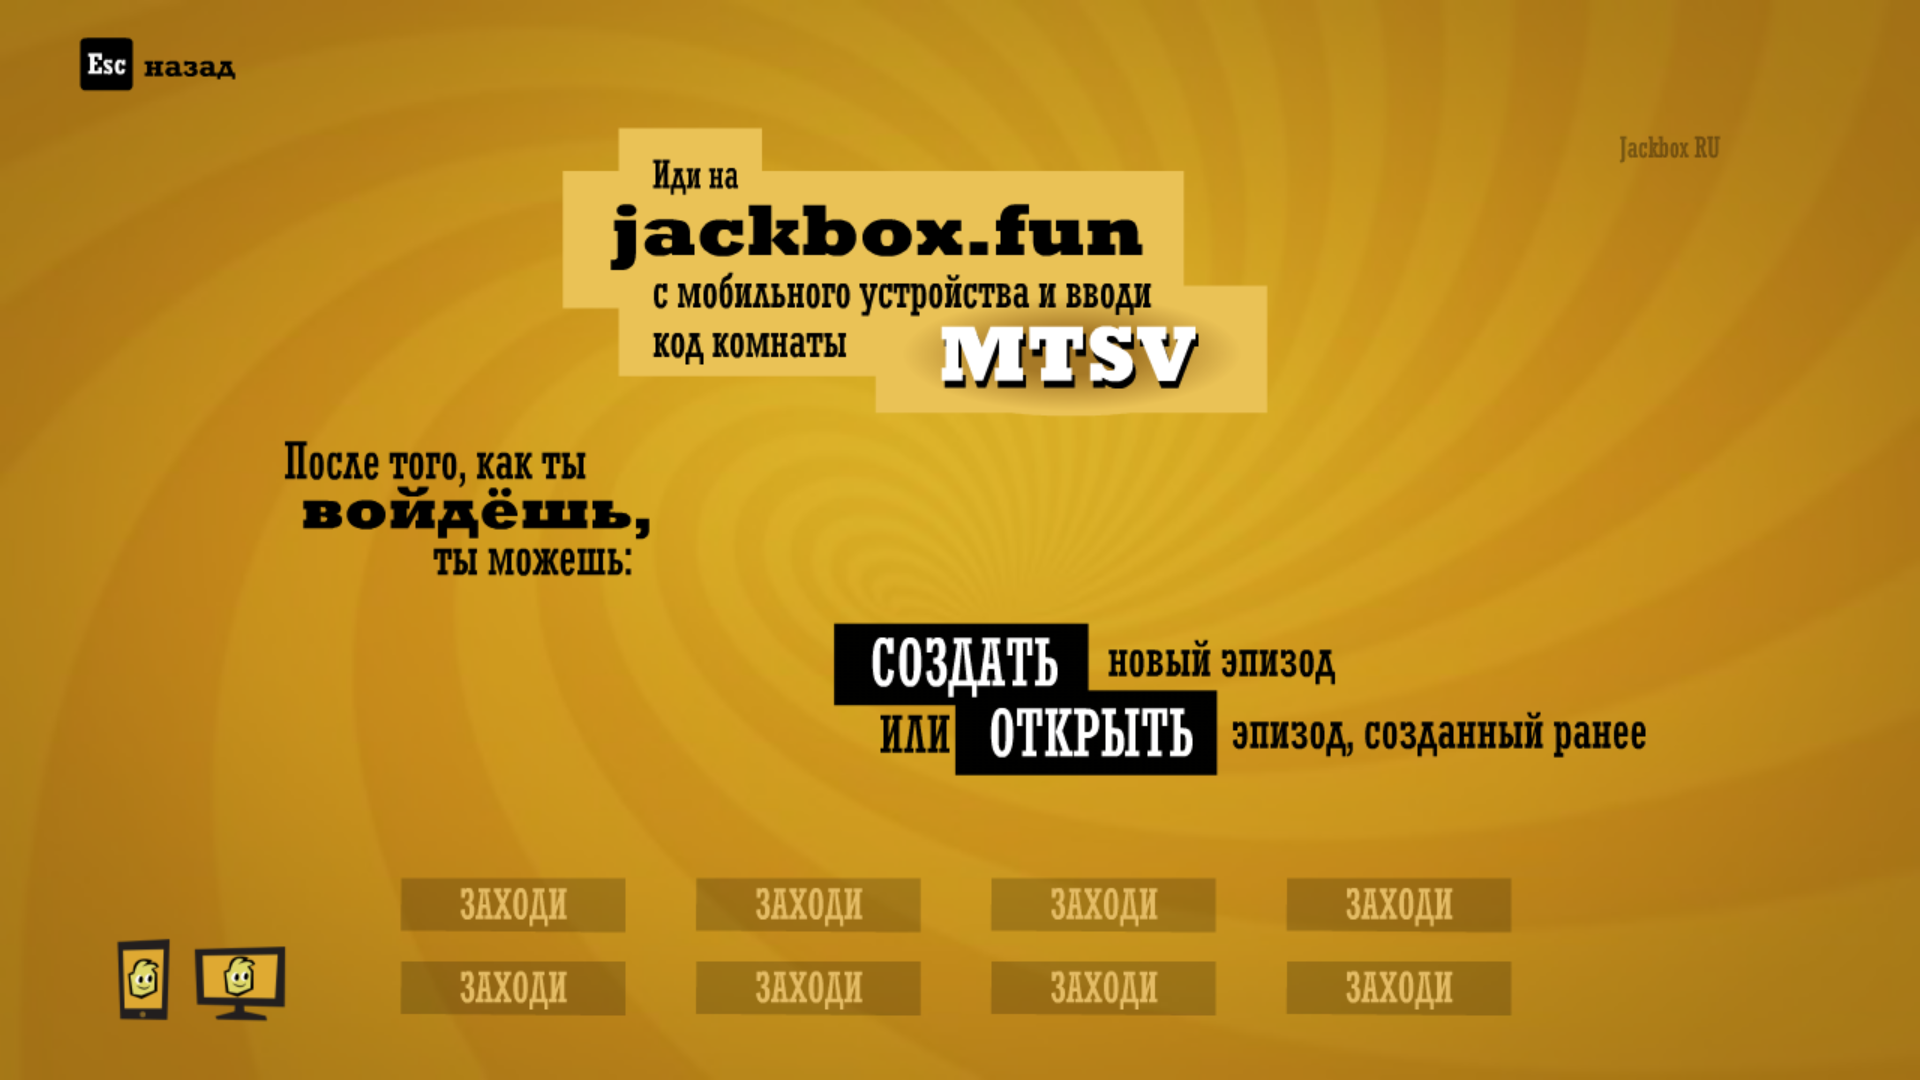 Jack Box fun. Jackbox fun игра. Комнаты на Jackbox. Jack Box 3 игры. Русский jackbox party 3